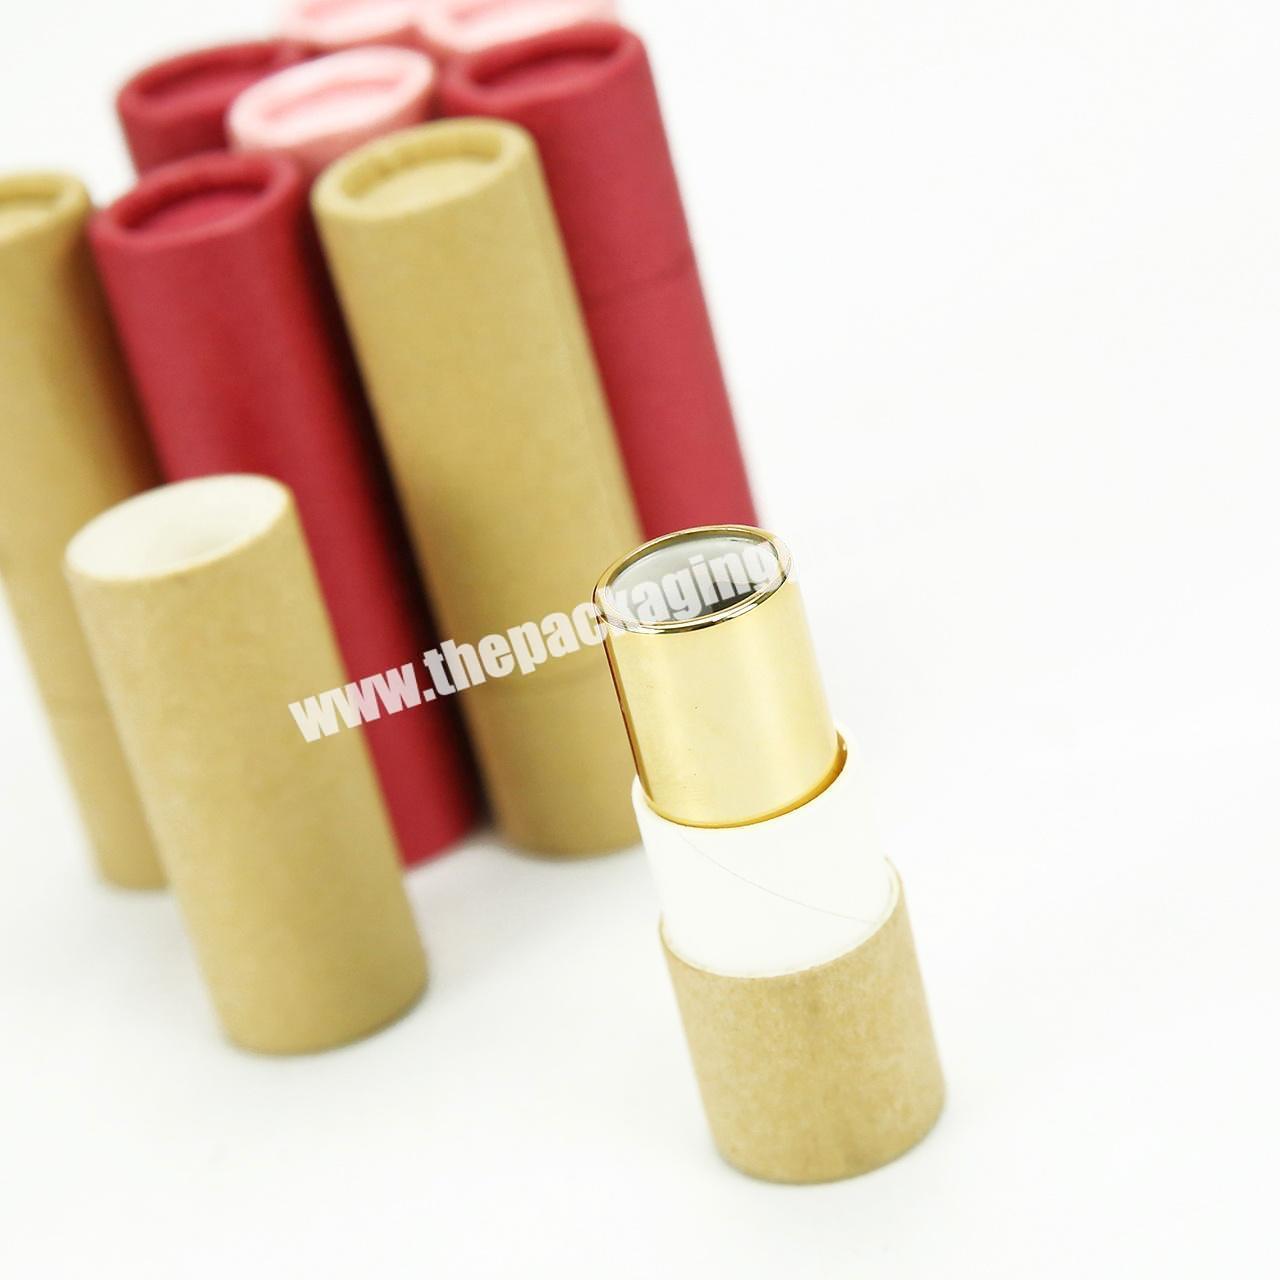 Custom print eco lip balm paper cardboard tubes 0.17 oz container